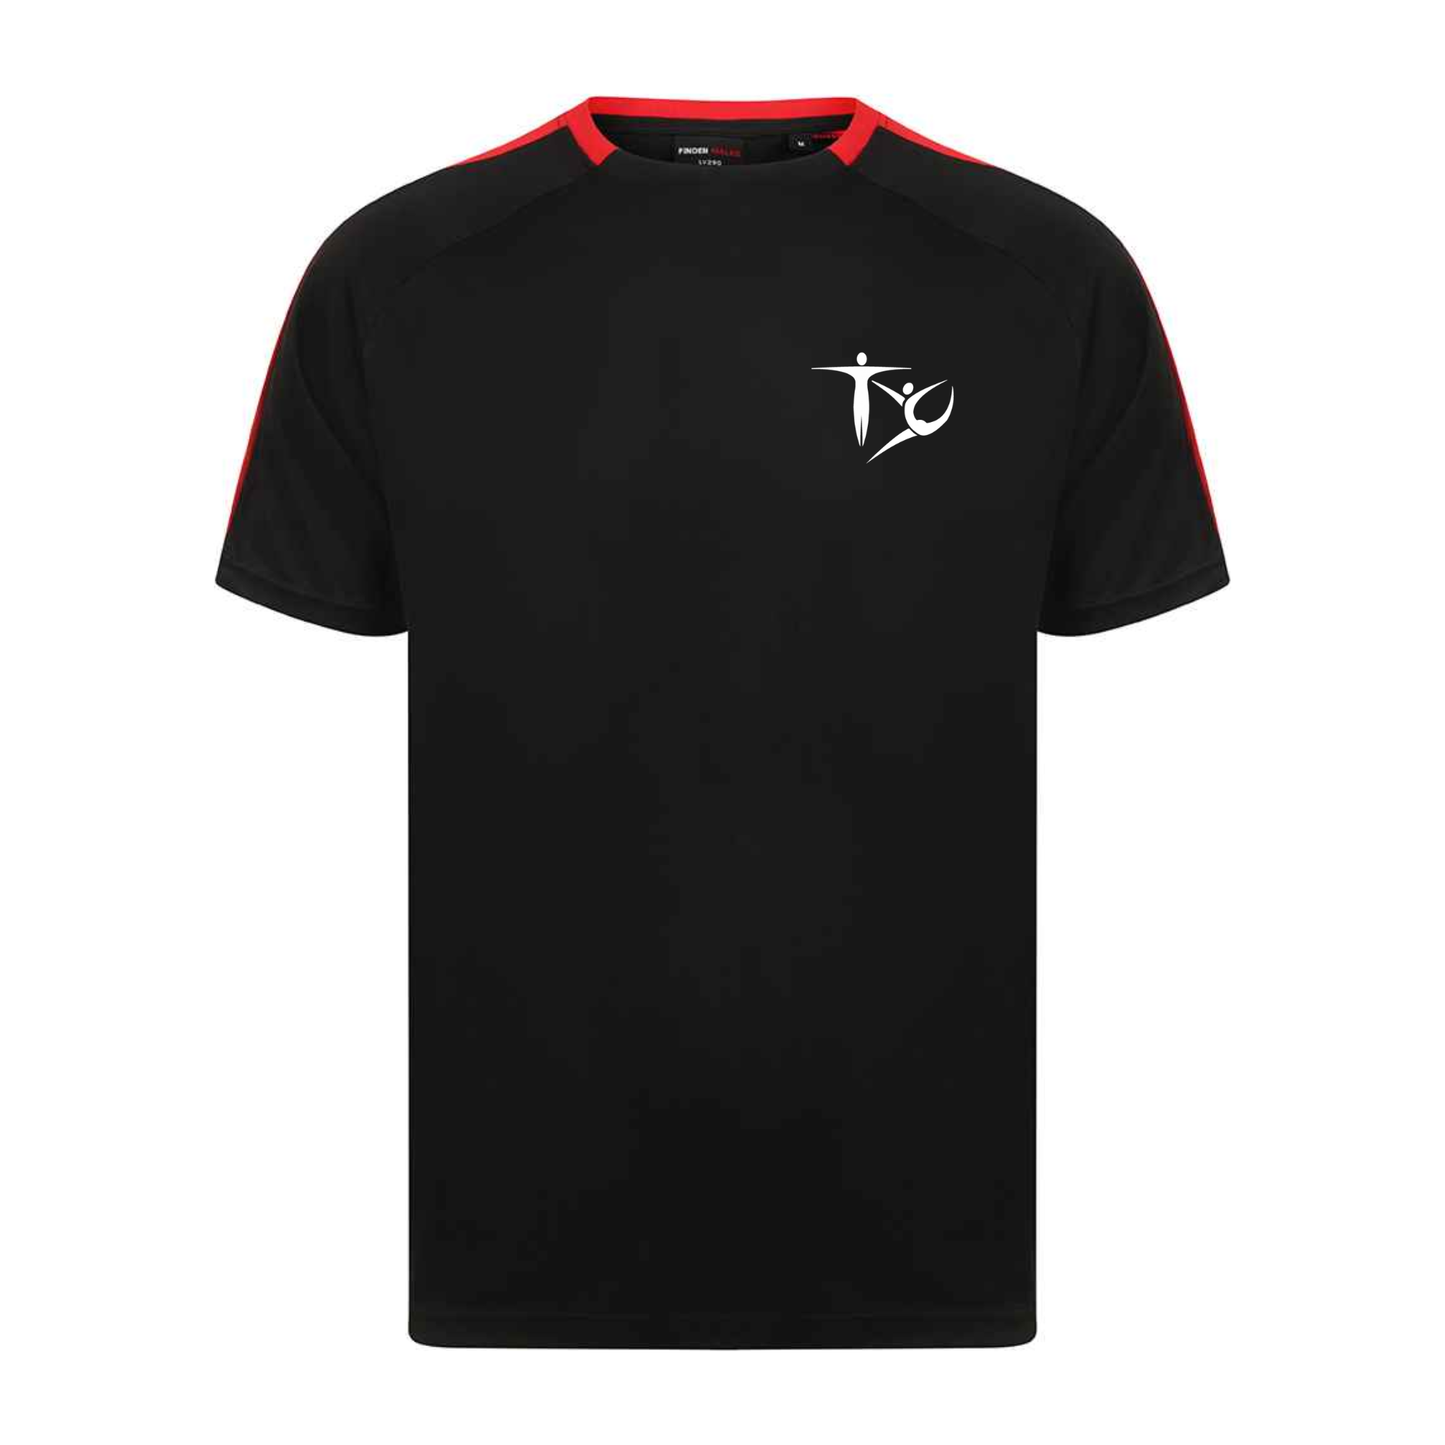 Basingstoke Coach Team Wear Tracksuit, T-Shirt and Bag Bundle Black/Red